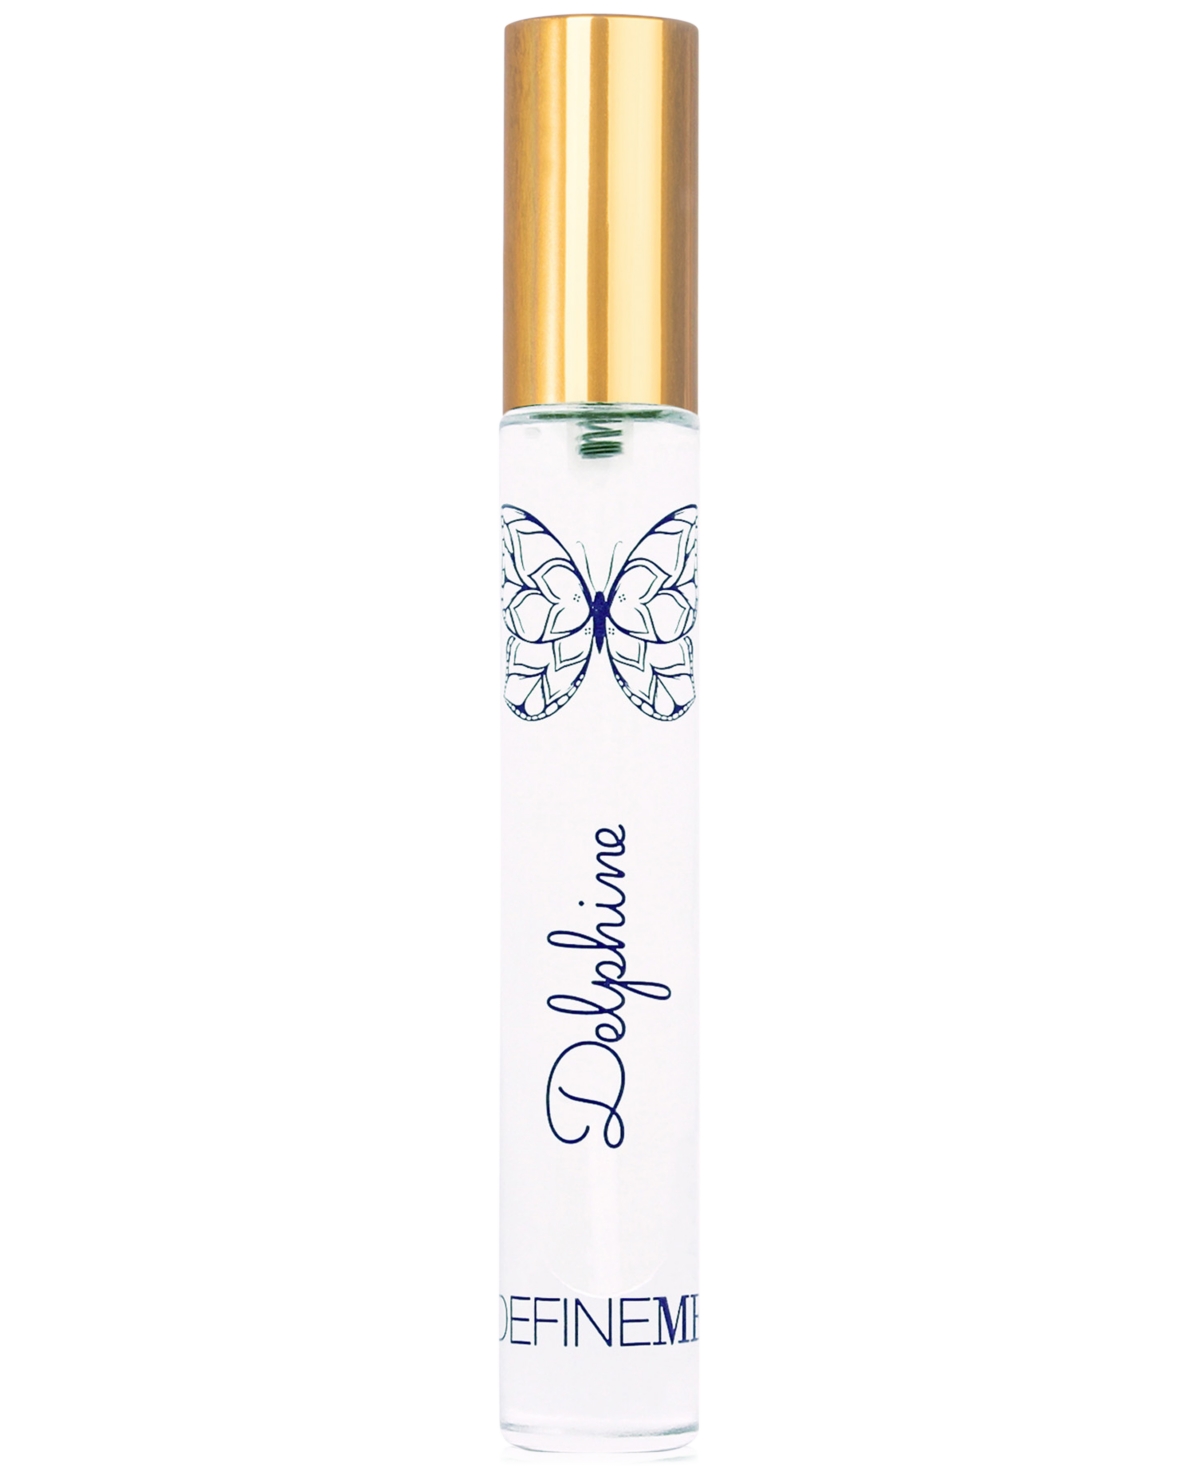 DefineMe Delphine 'On The Go' Natural Perfume Mist - 0.30 oz